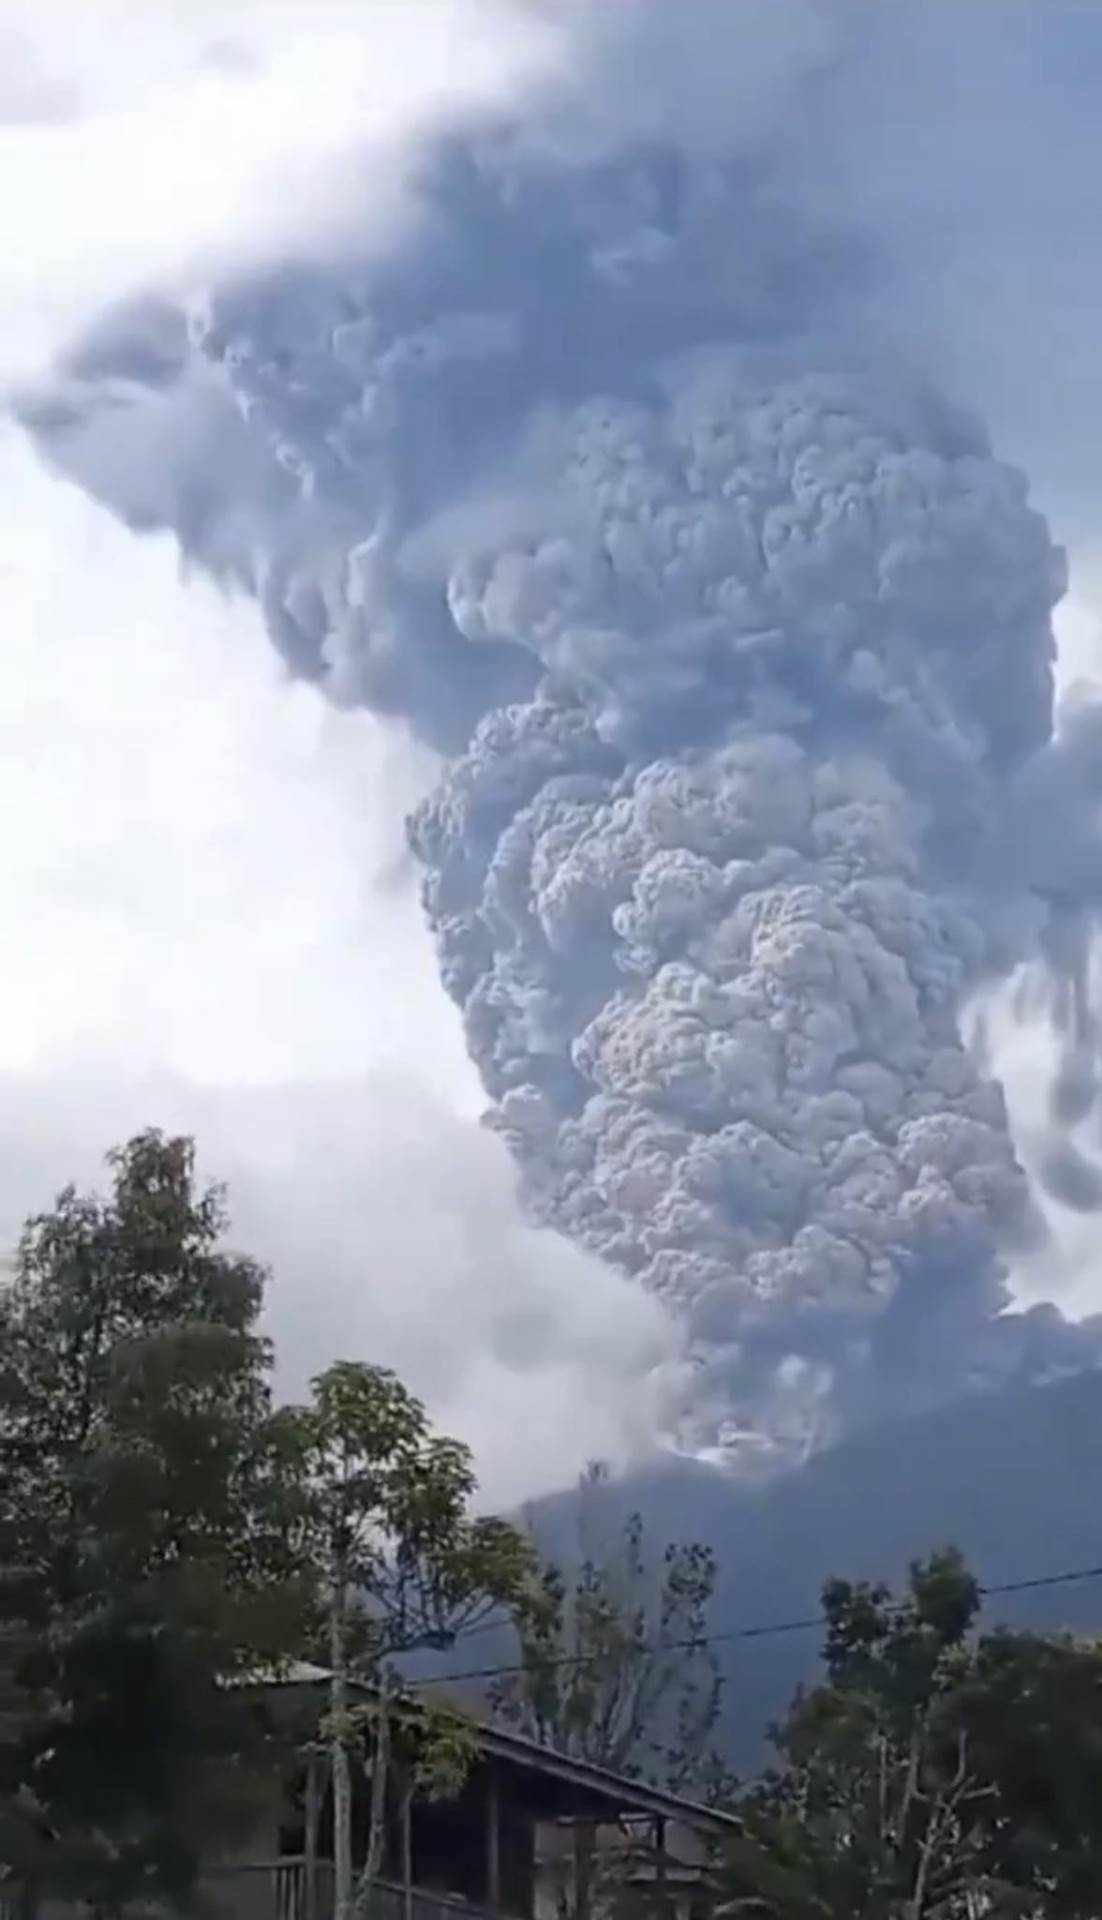  vulkan indonezija erupcija 